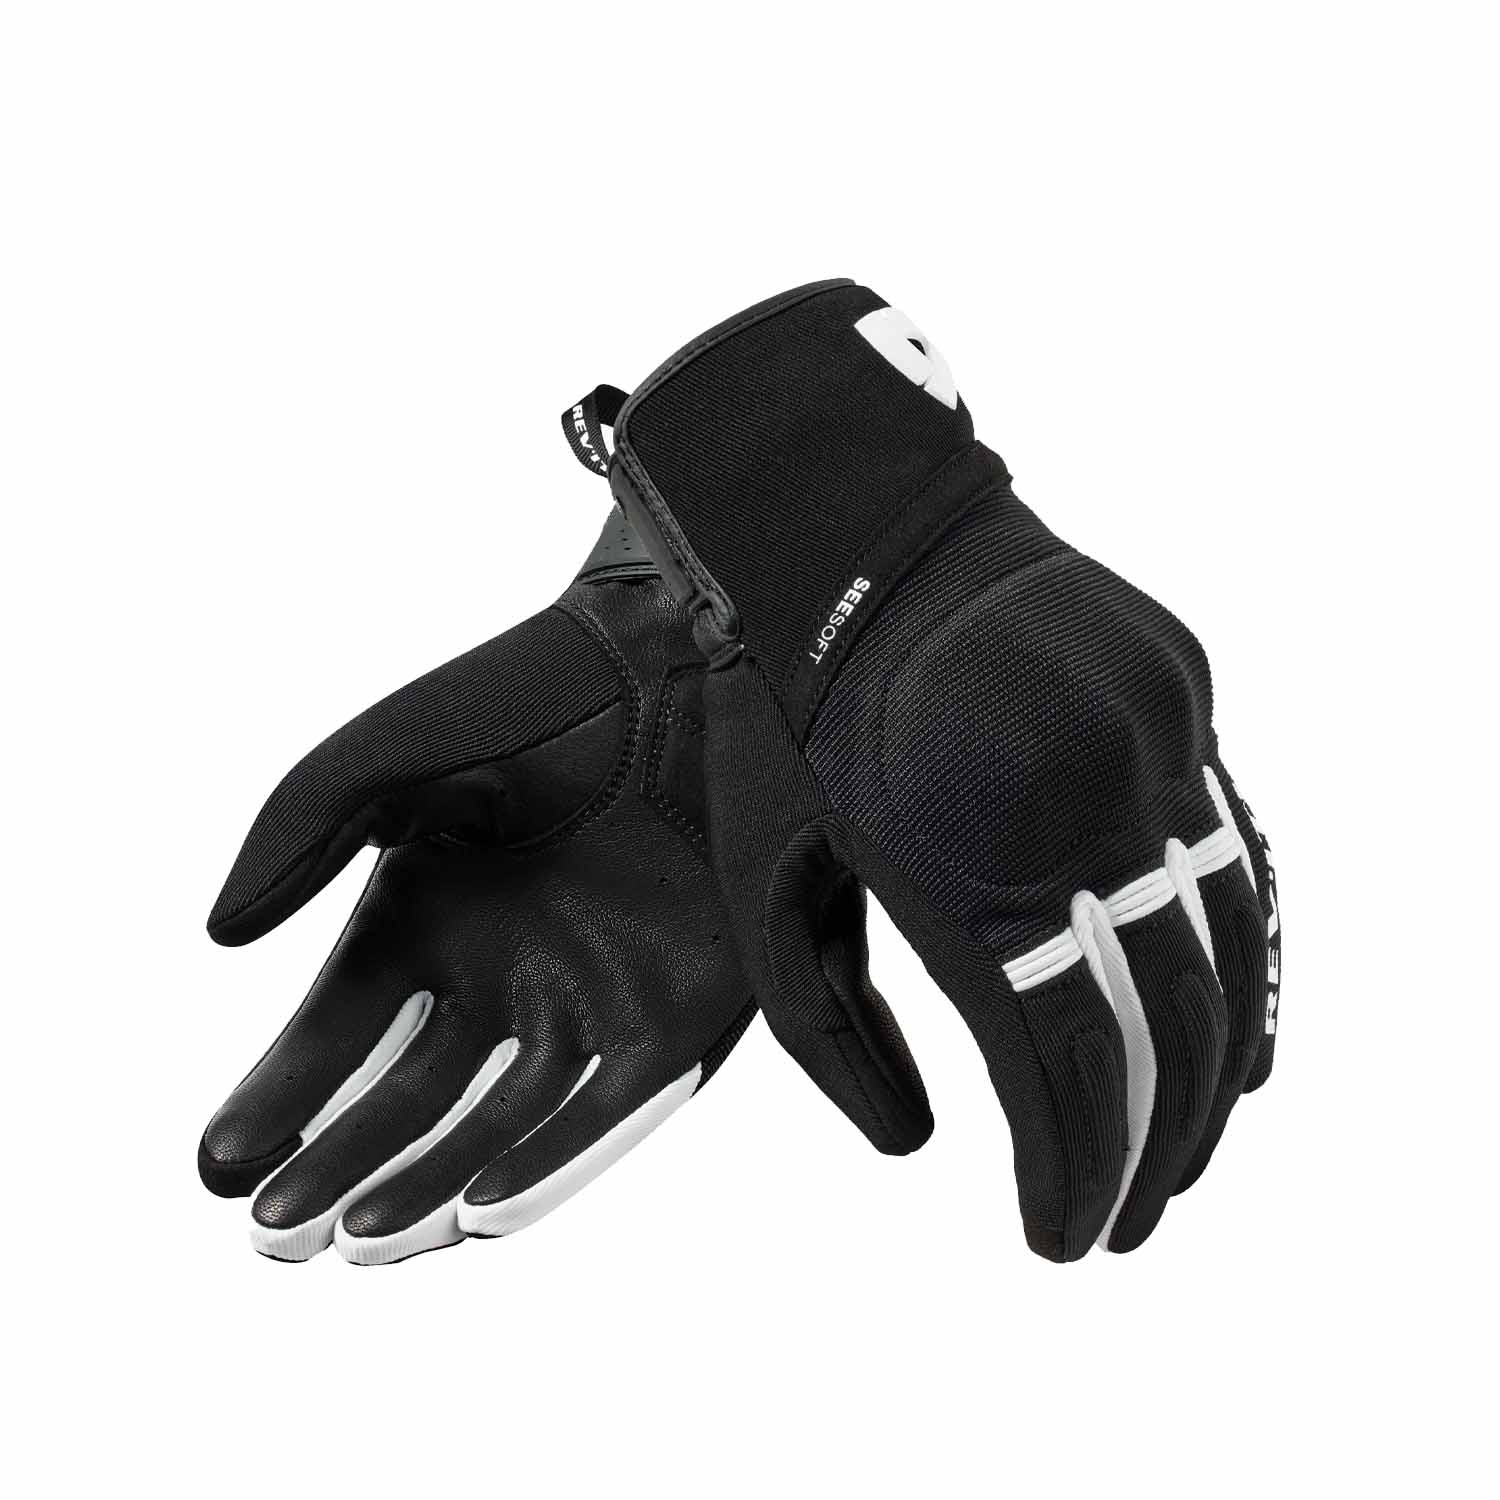 Image of REV'IT! Mosca 2 Gloves Black White Größe M